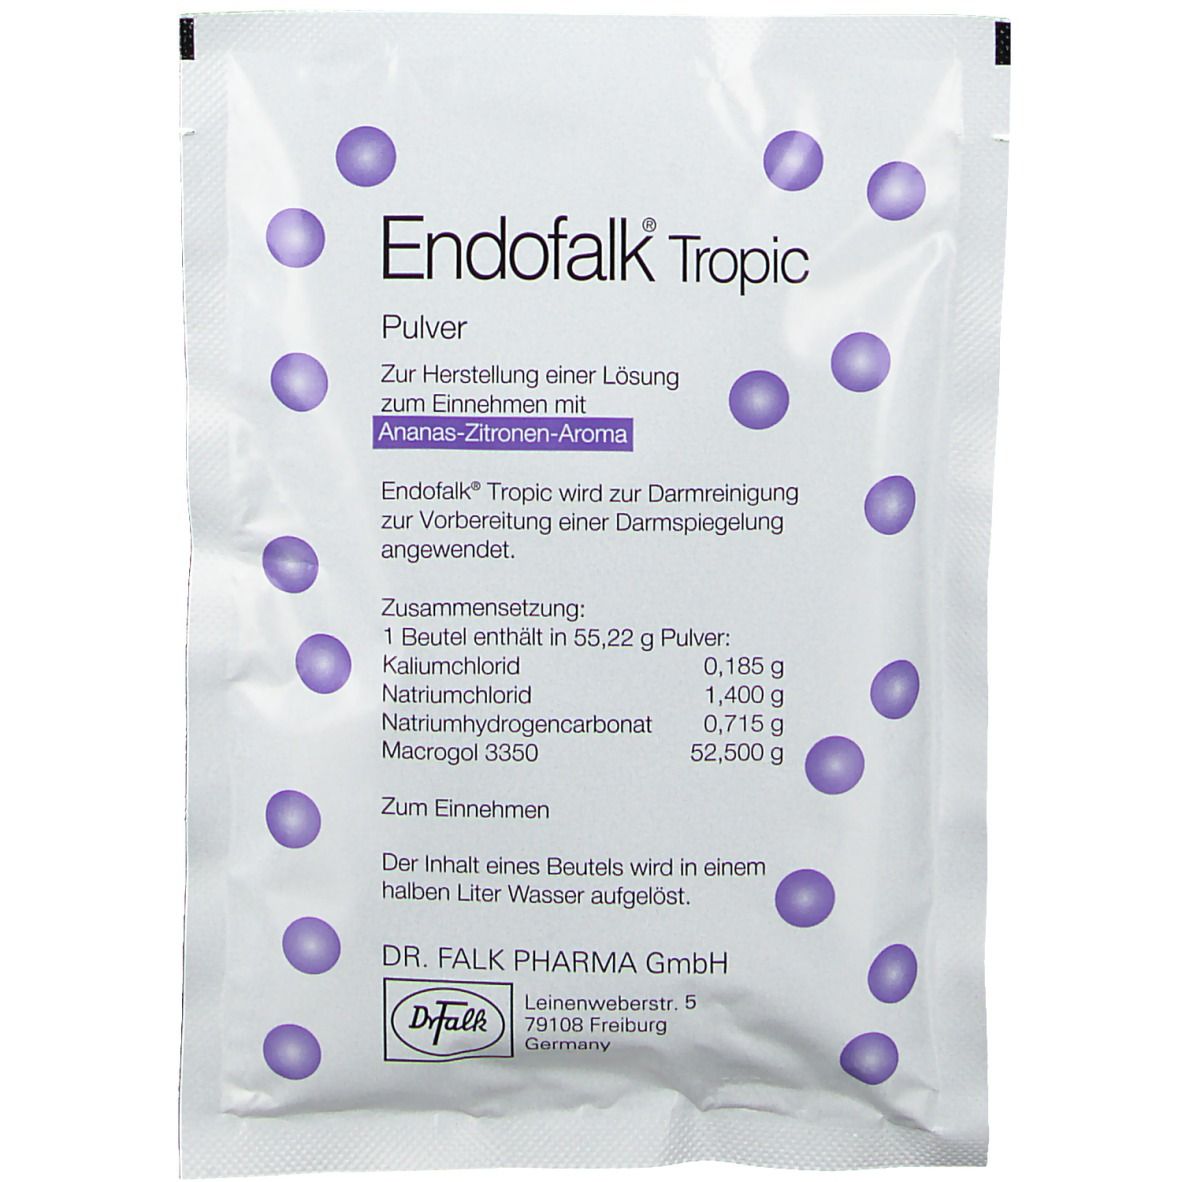 Endofalk® Tropic